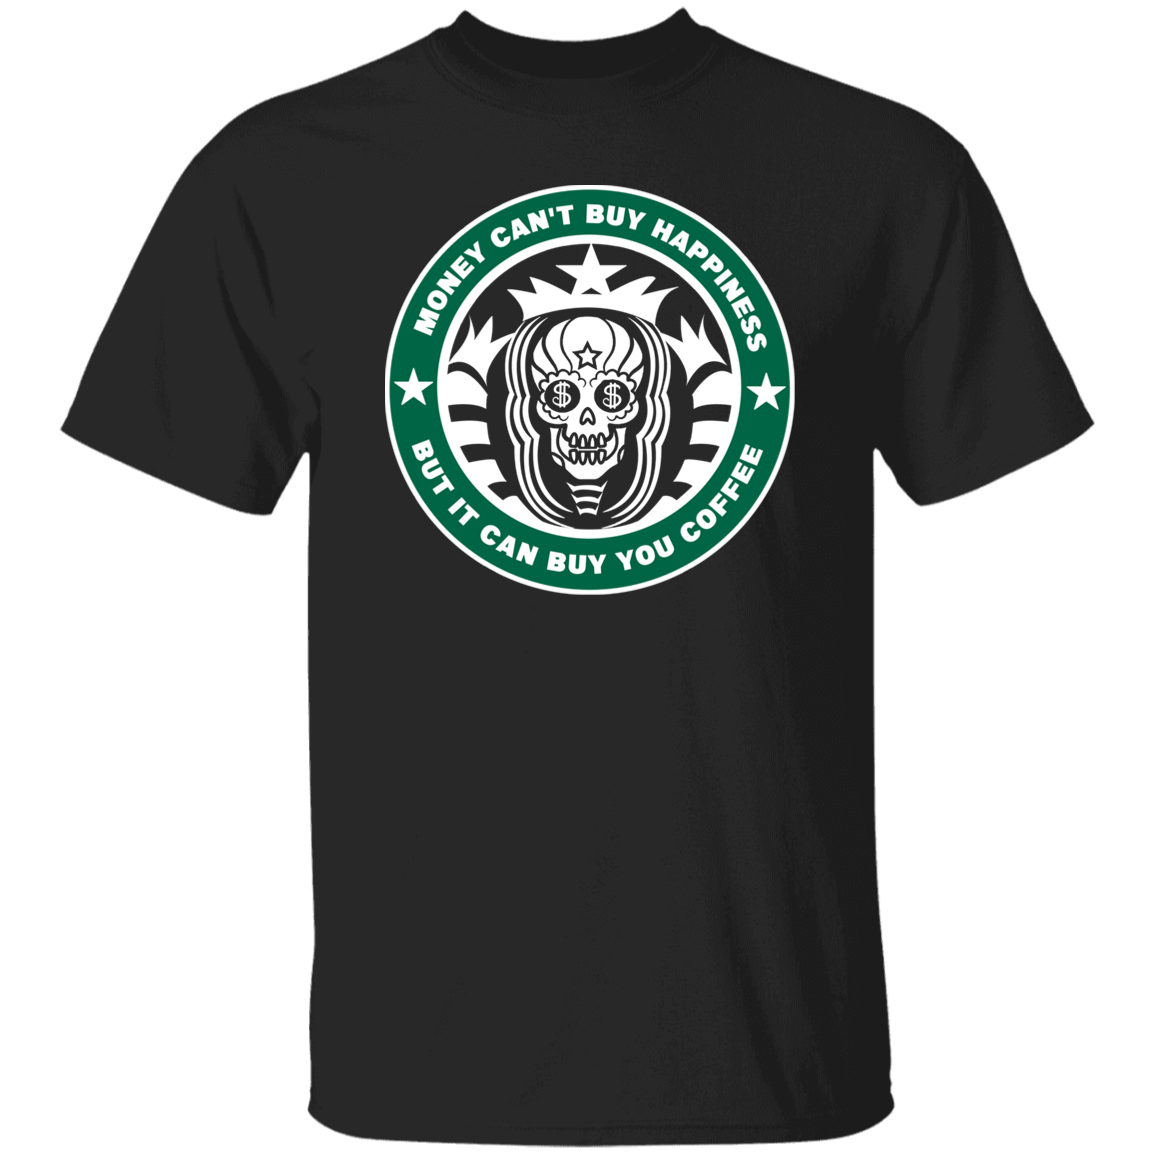 ArtichokeUSA Custom Design. Money Can't Buy Happiness But It Can Buy You Coffee. 100% Cotton T-Shirt